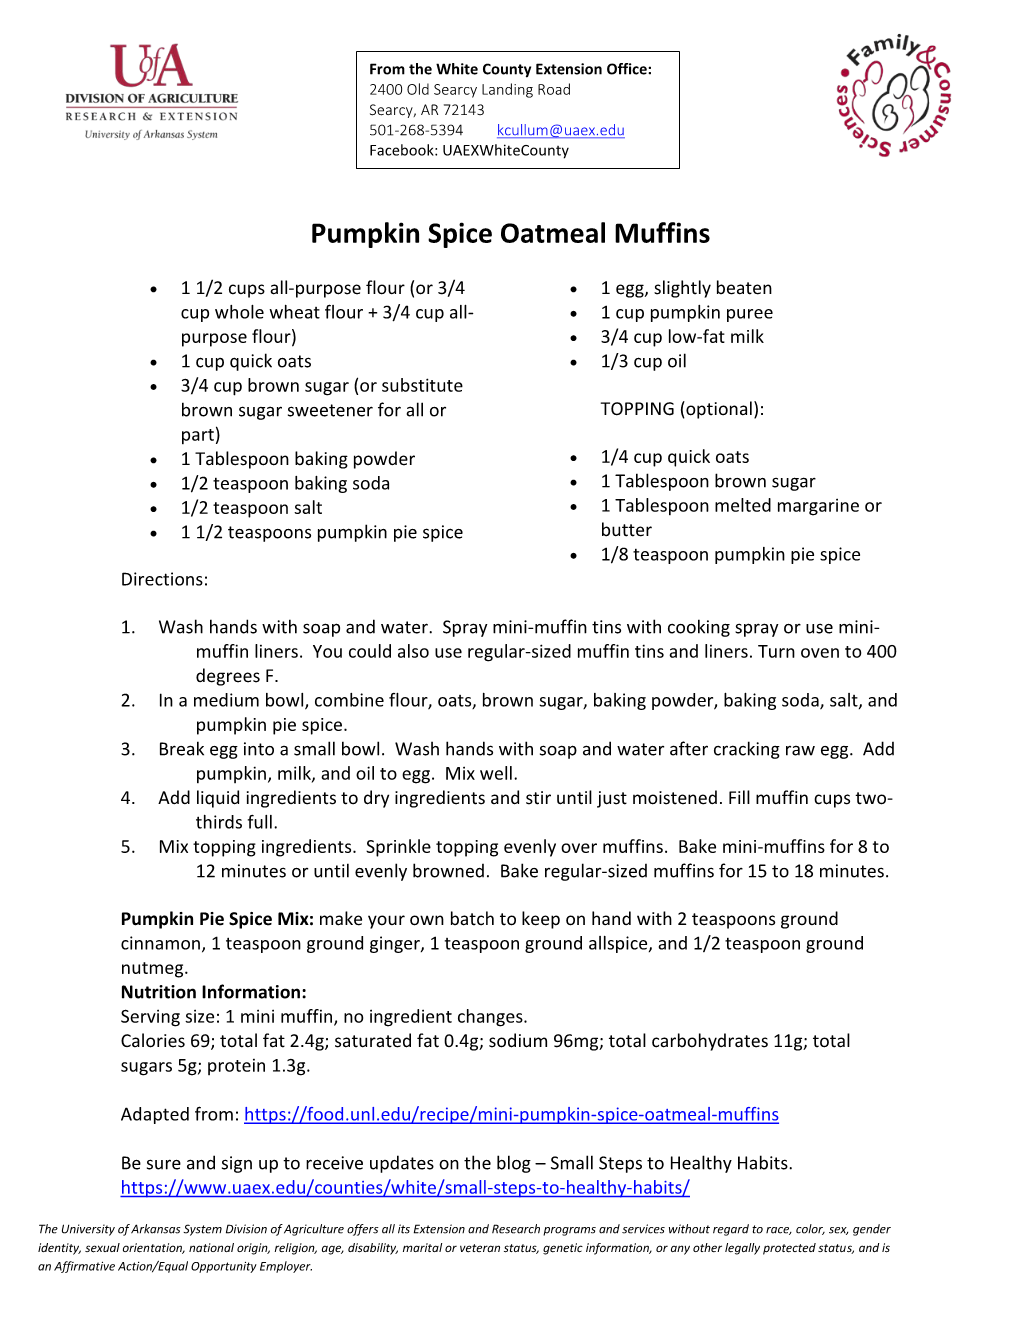 Pumpkin Spice Oatmeal Muffins